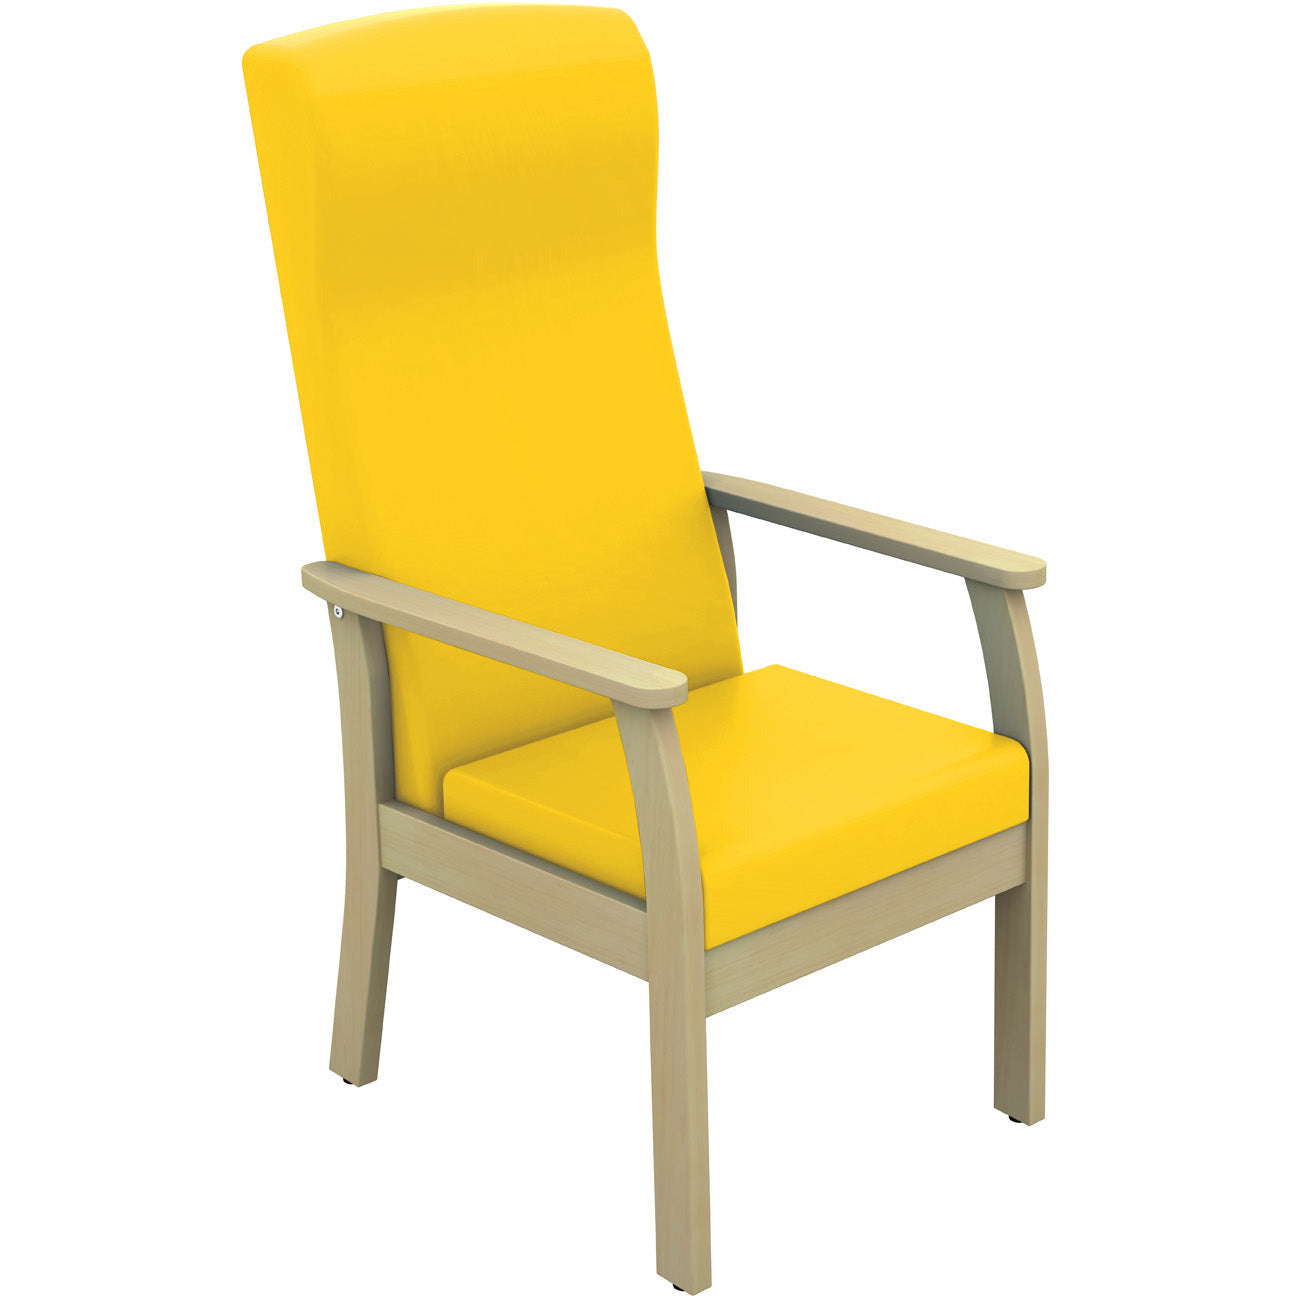 Sunflower Atlas High-Back Patient Chair - Vinyl Upholstery